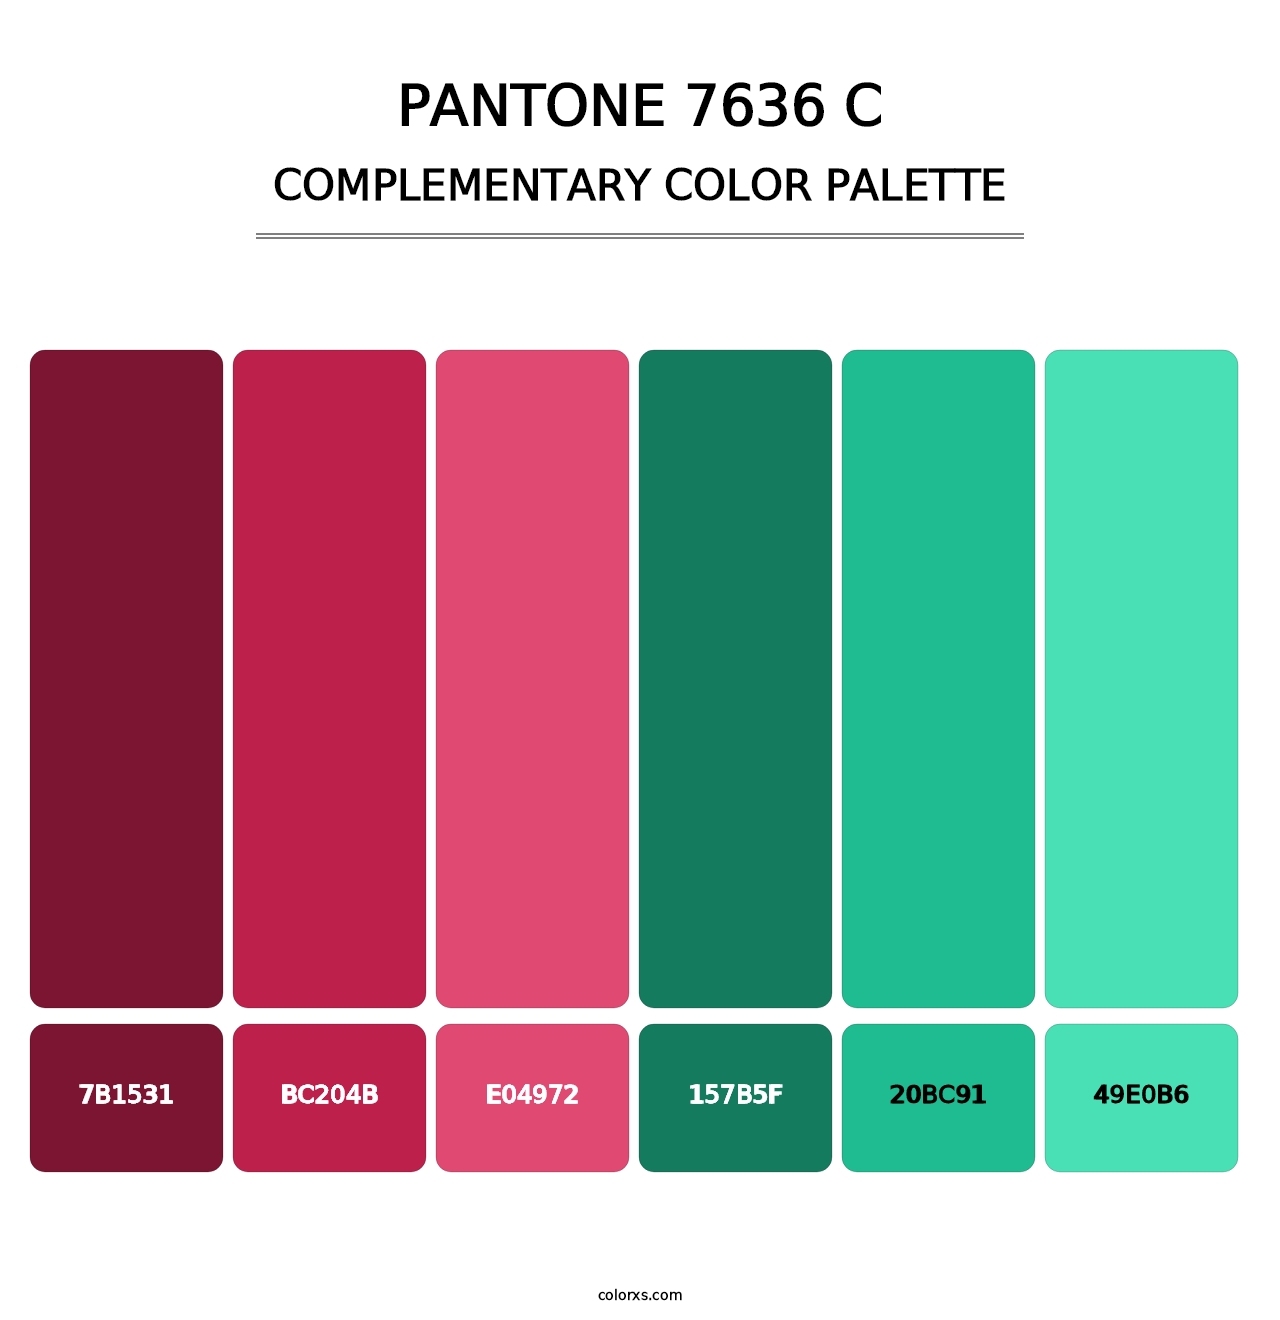 PANTONE 7636 C - Complementary Color Palette